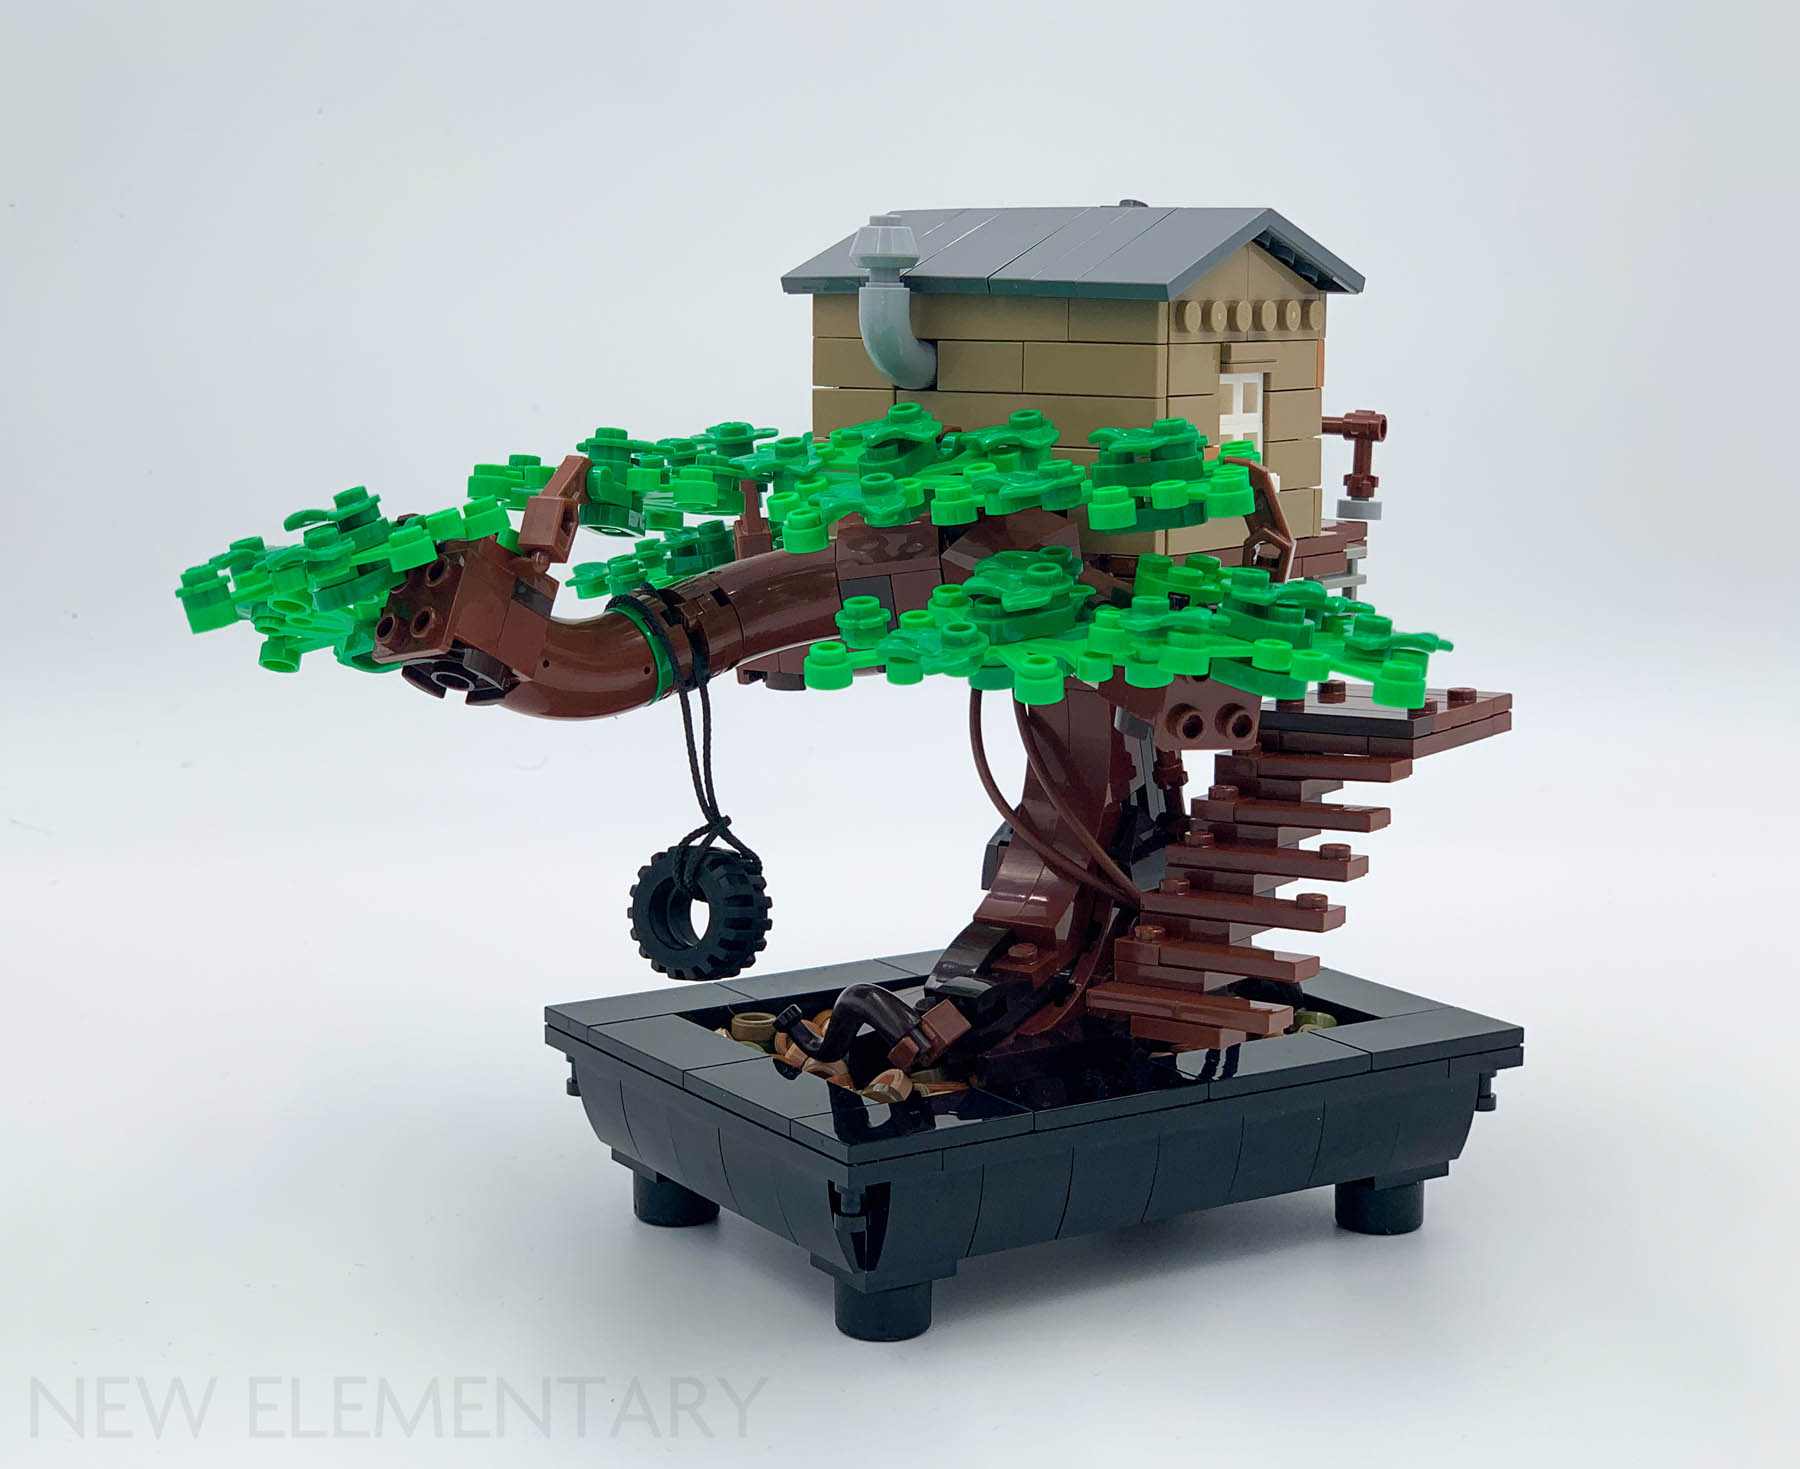 LEGO Bonsai Tree Review